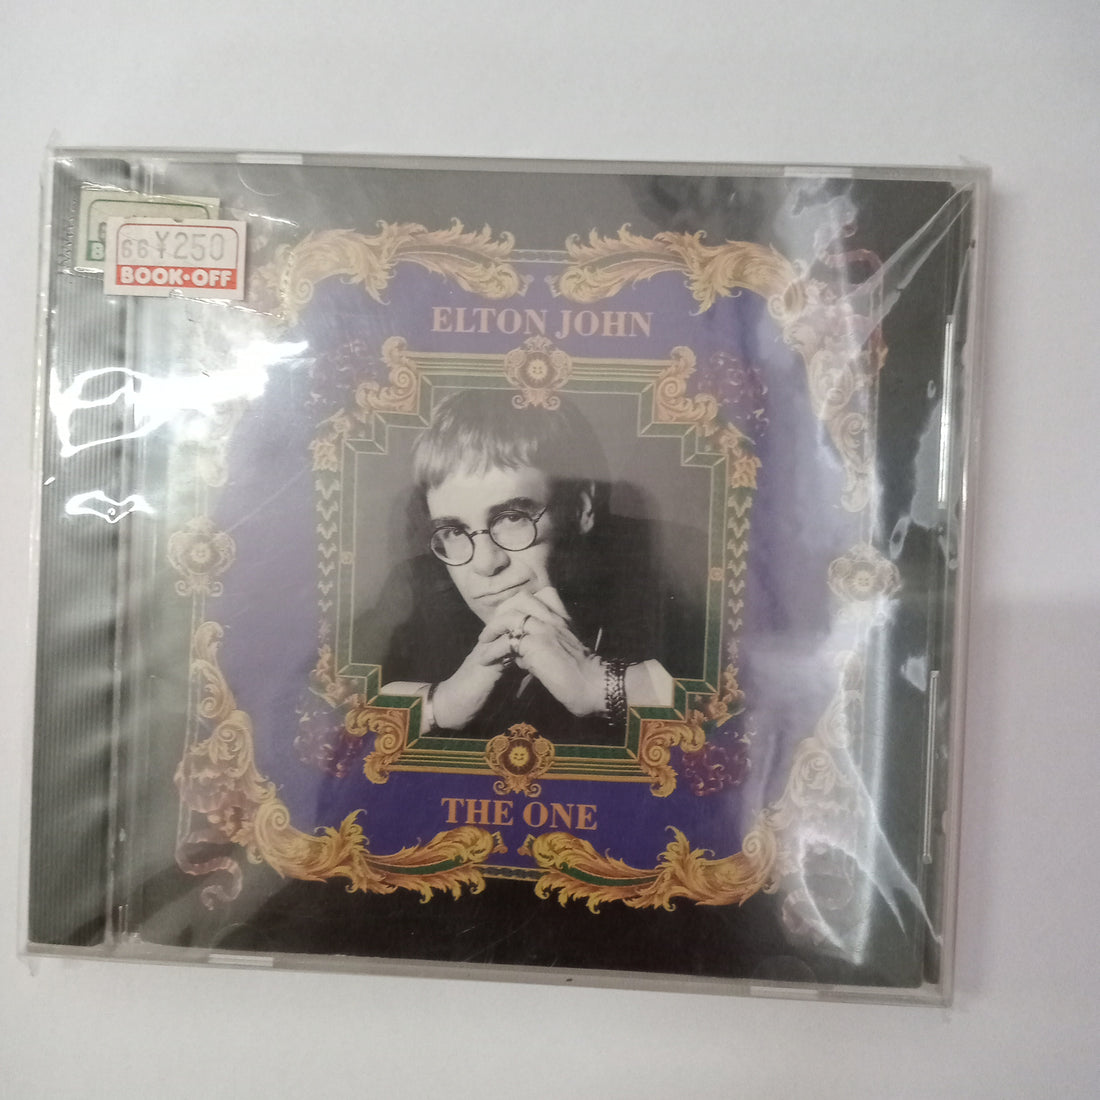 Elton John - The One (CD) (NM or M-)